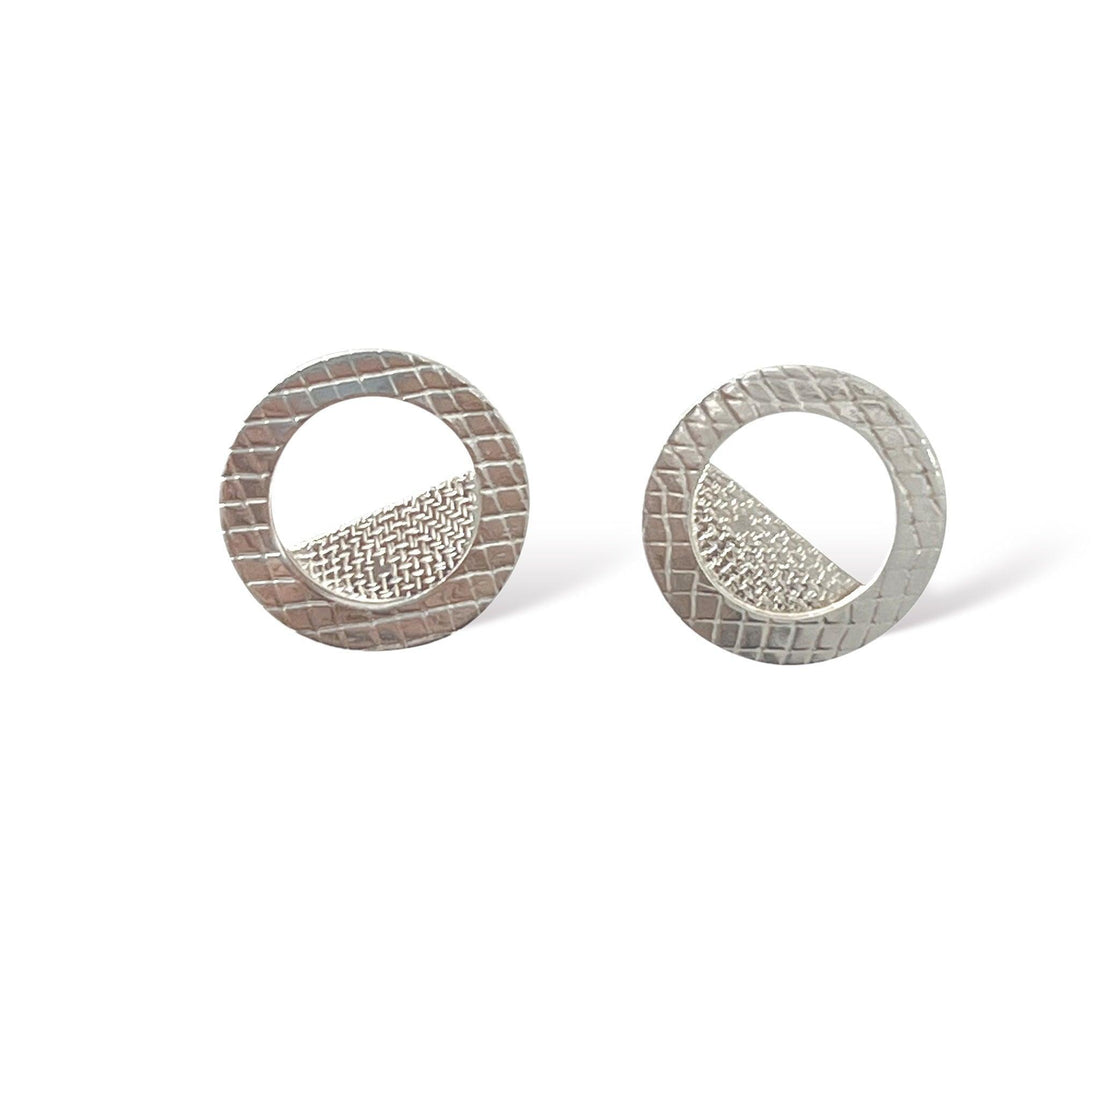 Circling Back Silver Disc Stud Earrings - kelli montgomery jewelry